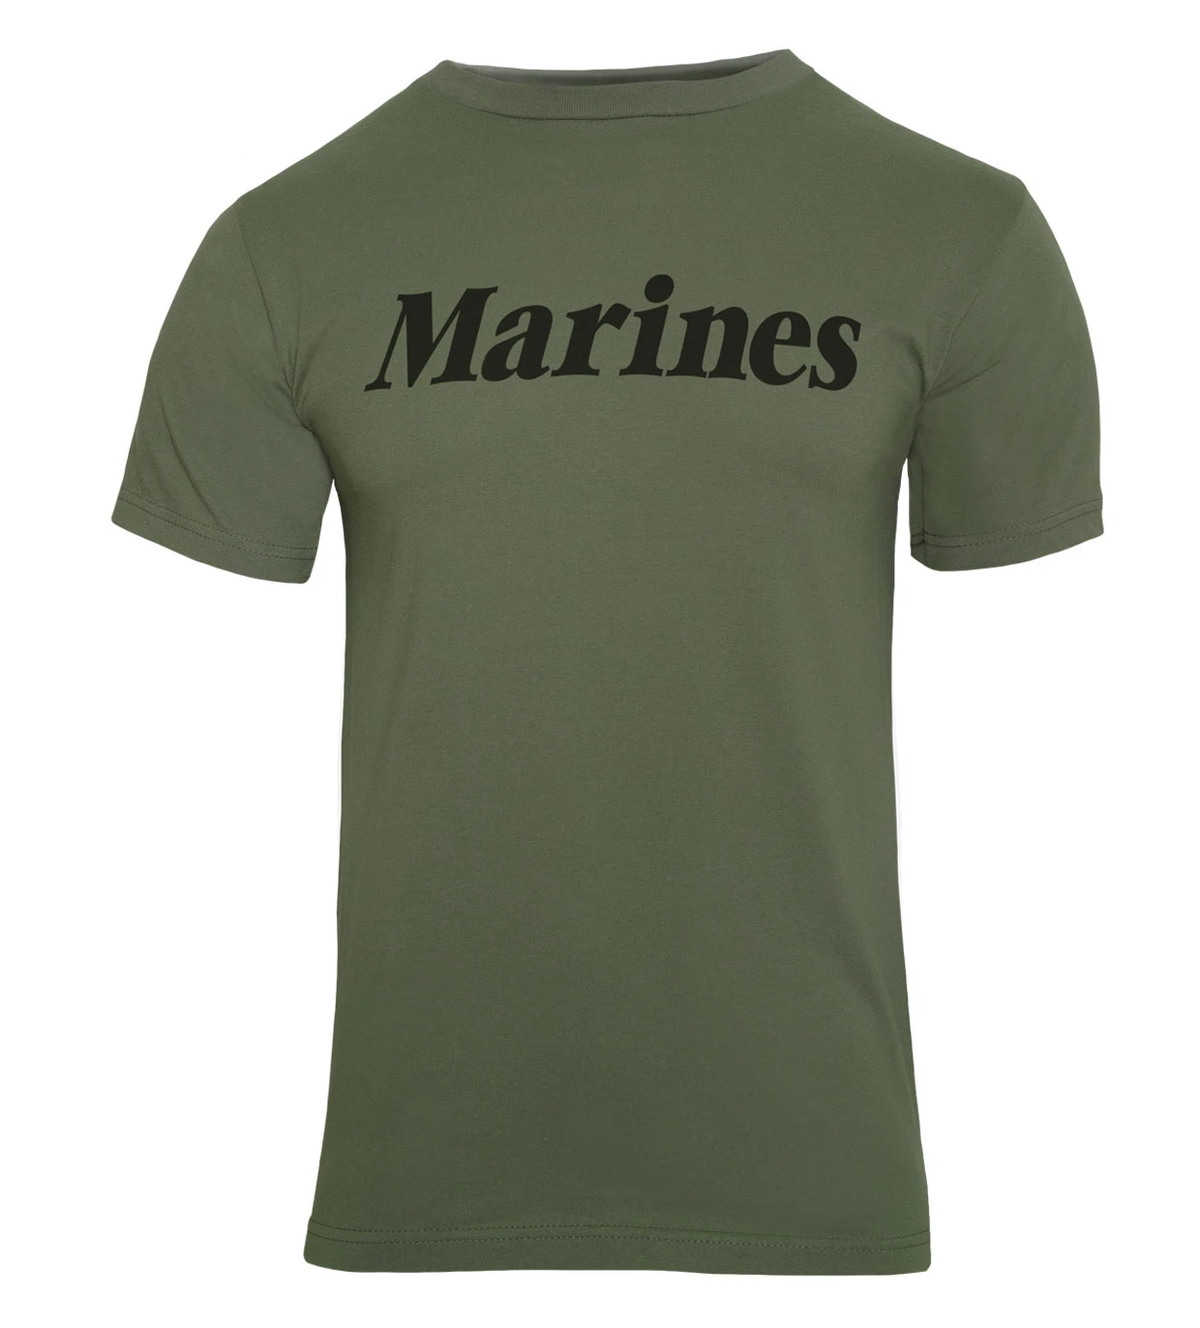 Rothco Olive Drab Military PT Shirt - MARINES